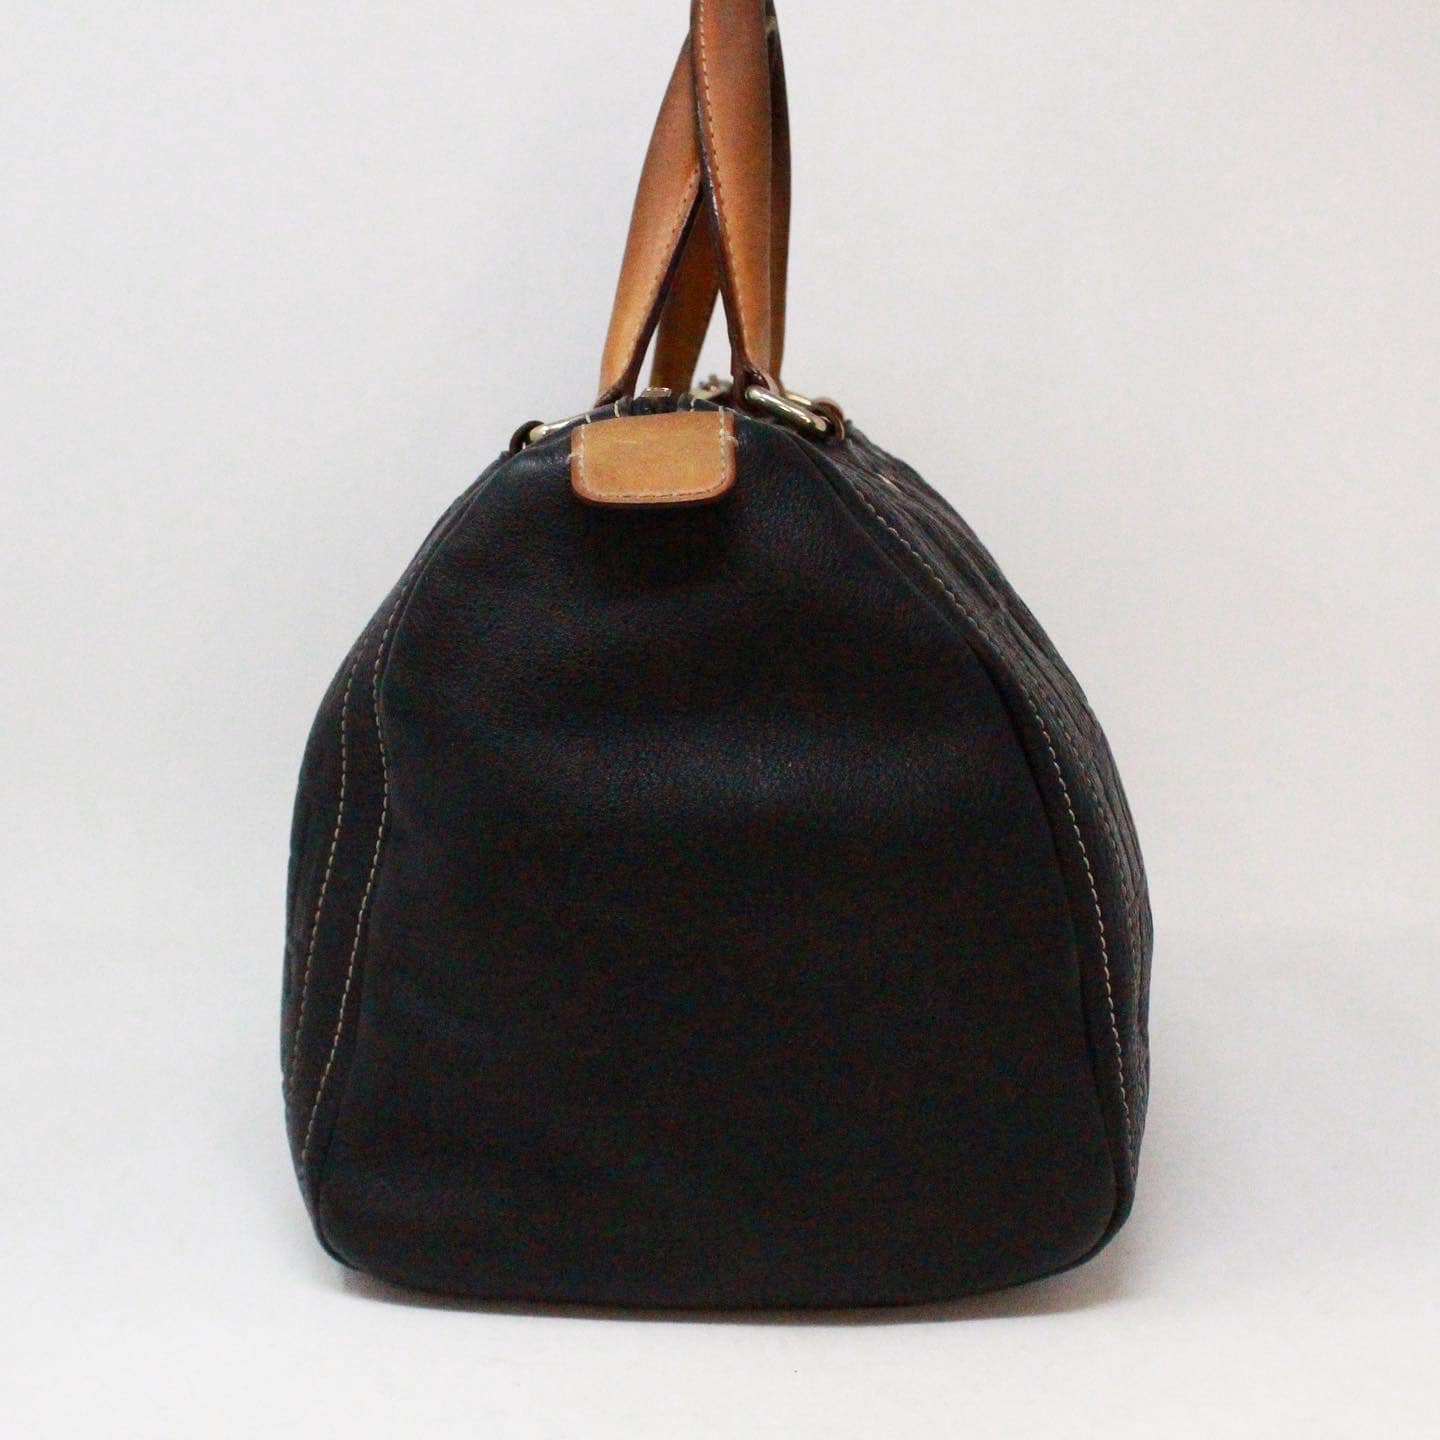 Shop Carolina Herrera Bags online